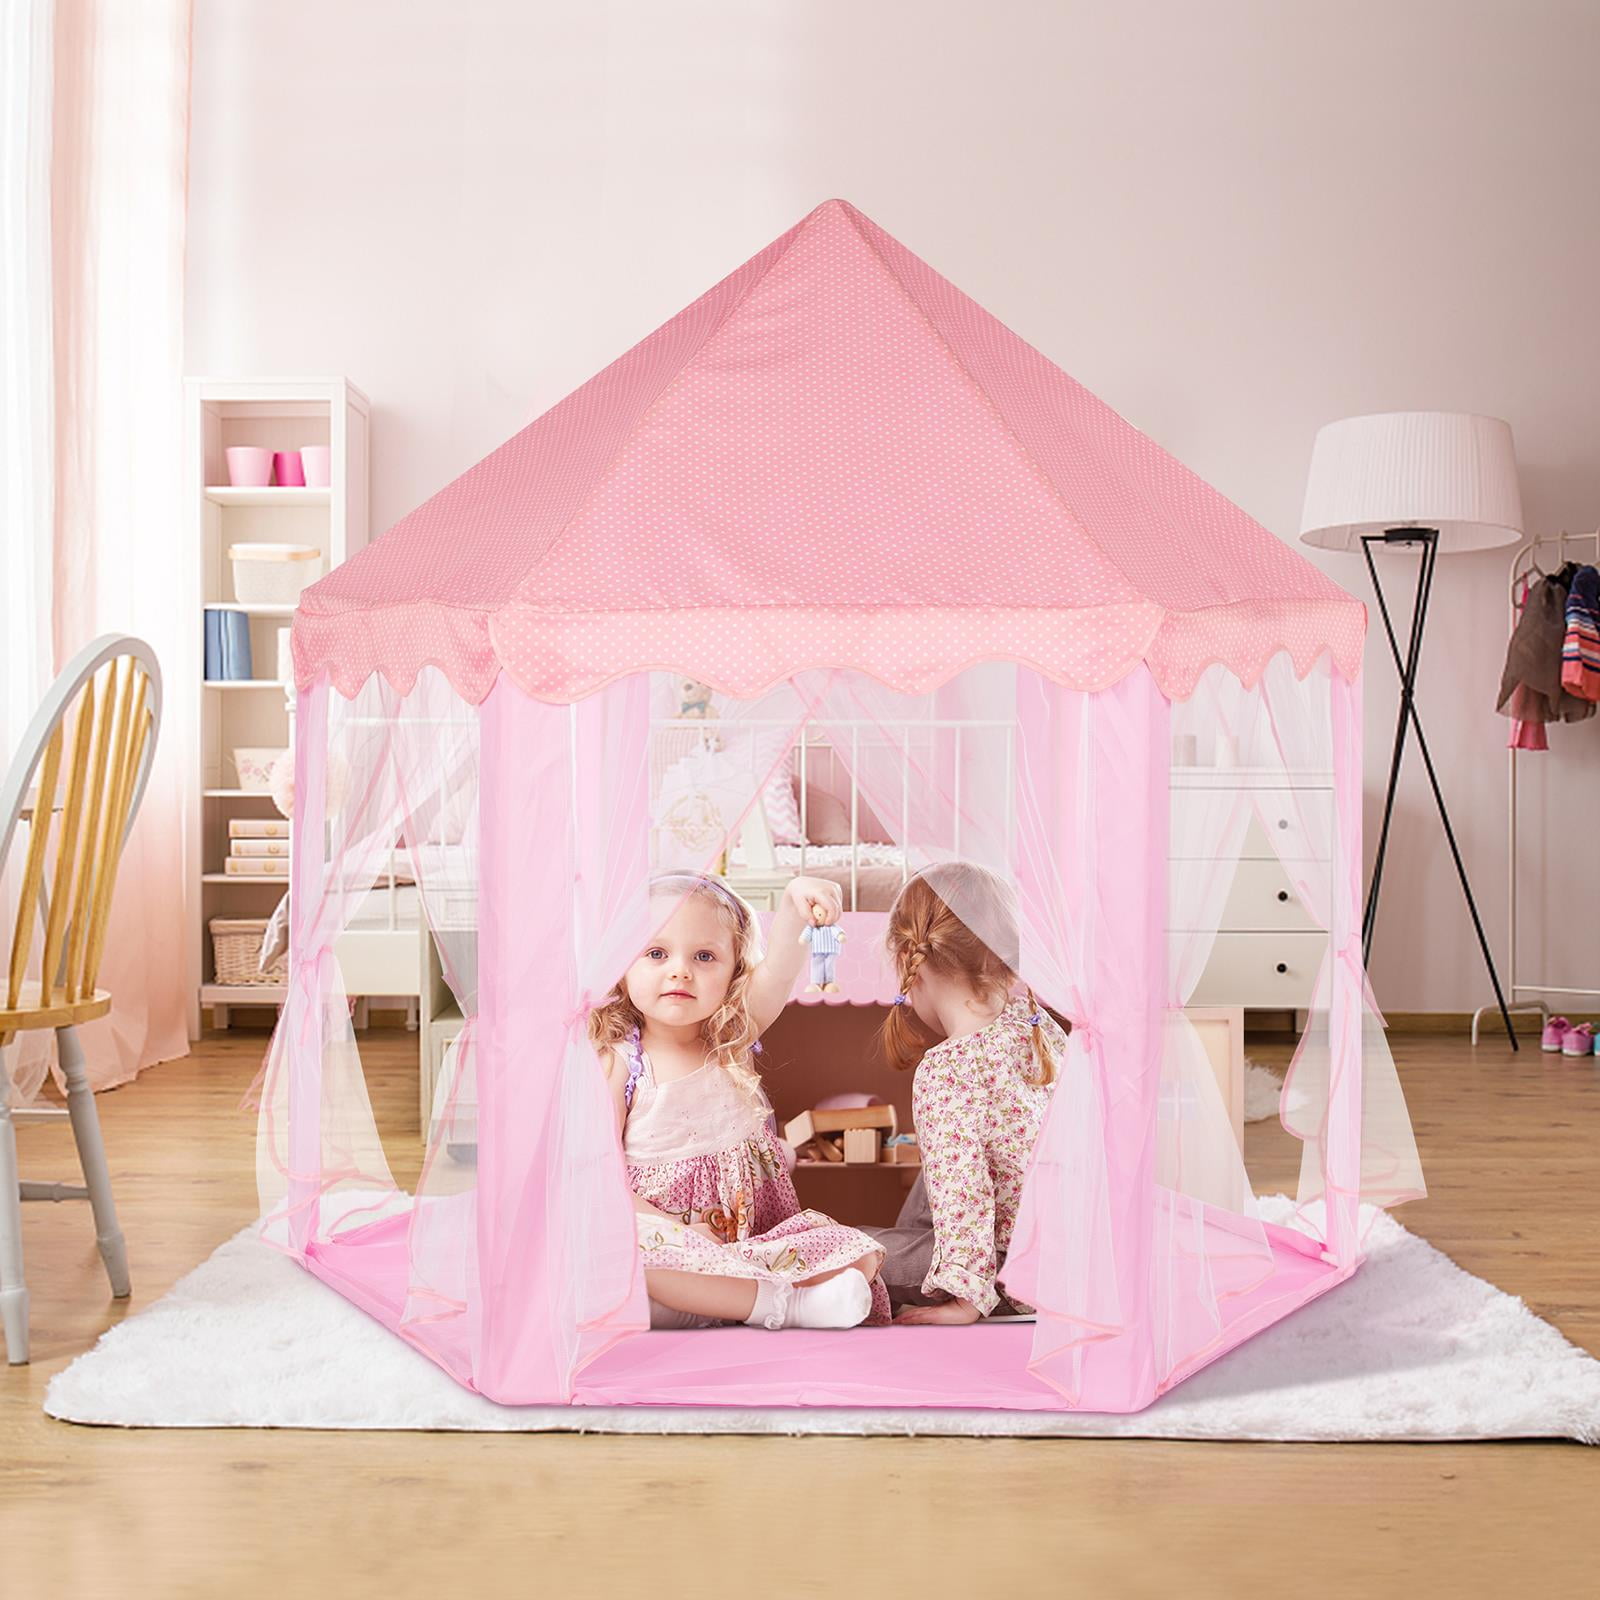 Kids Pop-Up Play Tent Fairy Girls Princess Castle Playhouse Ger Indoor Outdoor 